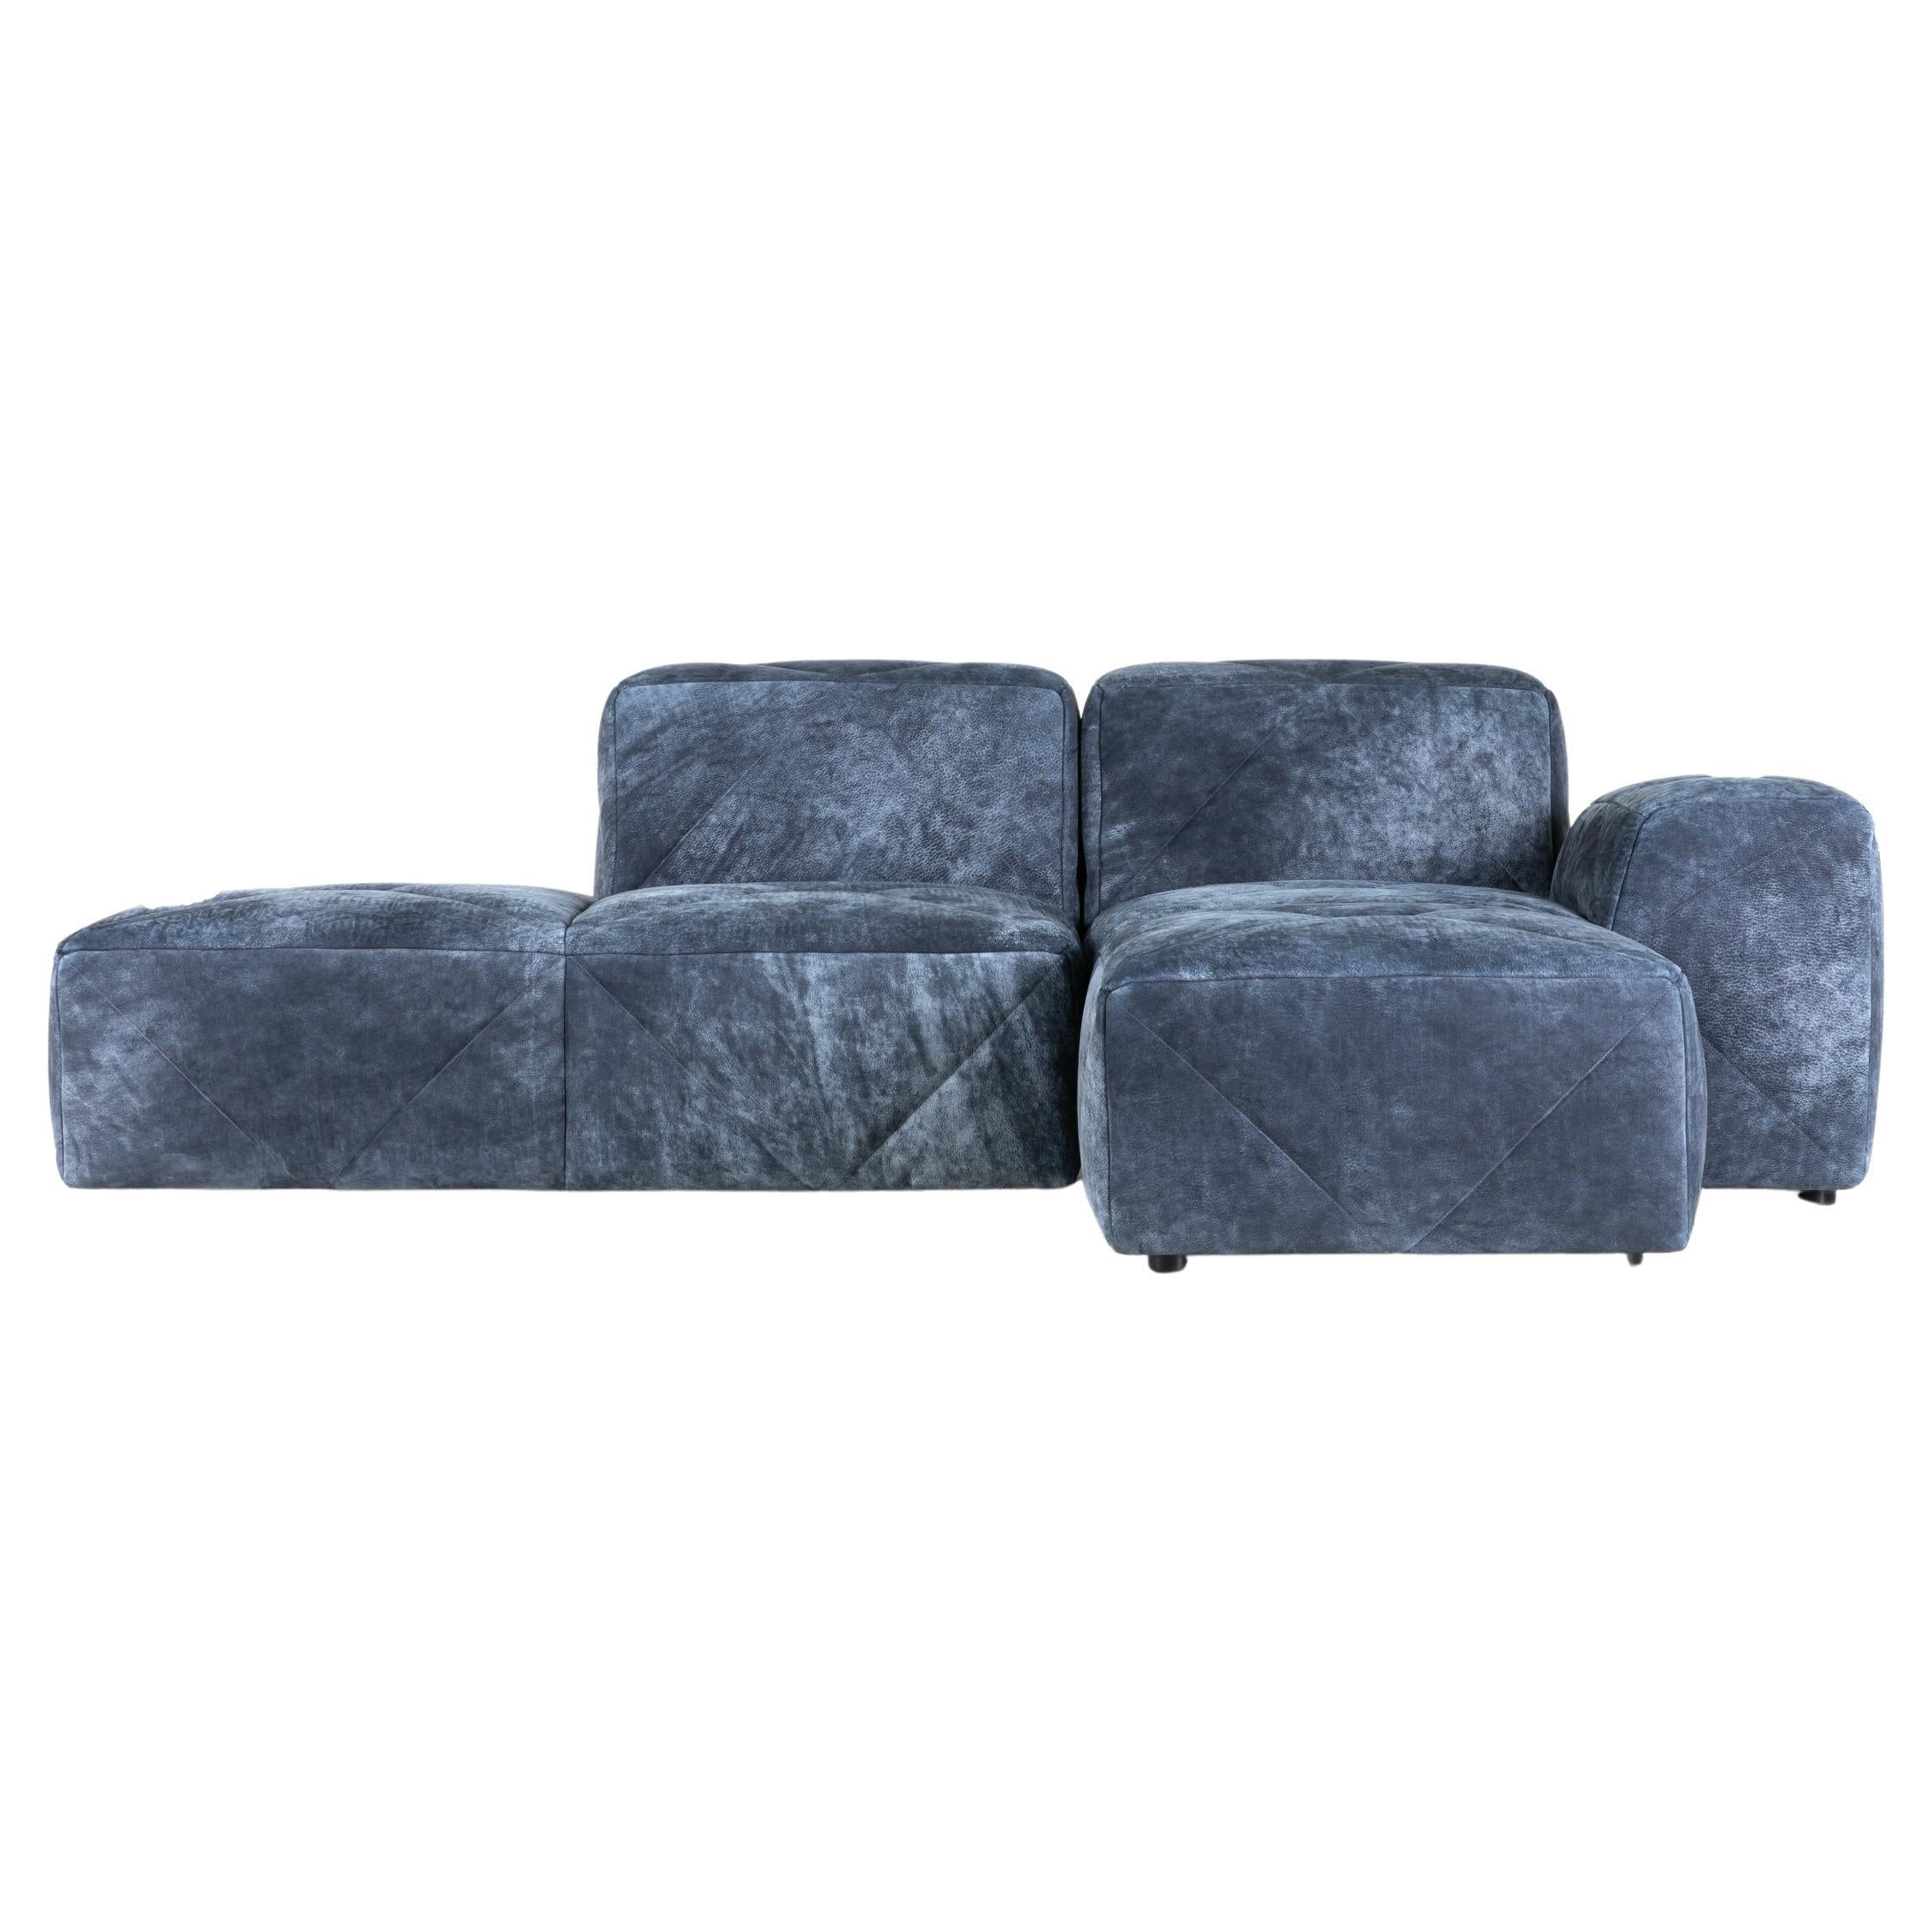 Moooi BFF Right Arm Chaise Longue Sofa in Dwarf Rhino Buffed Blue Upholstery